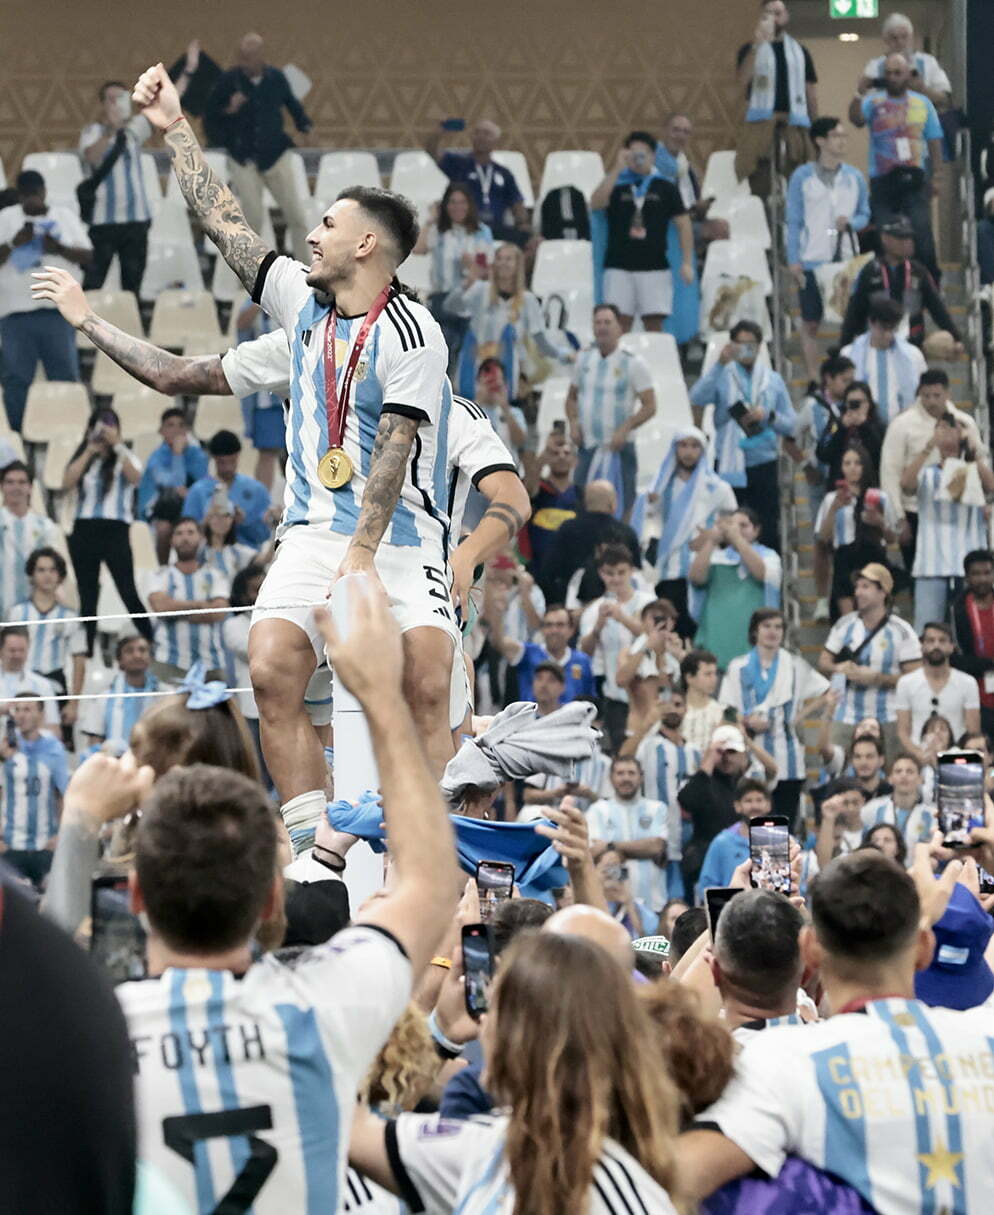 Argentina team celebrating